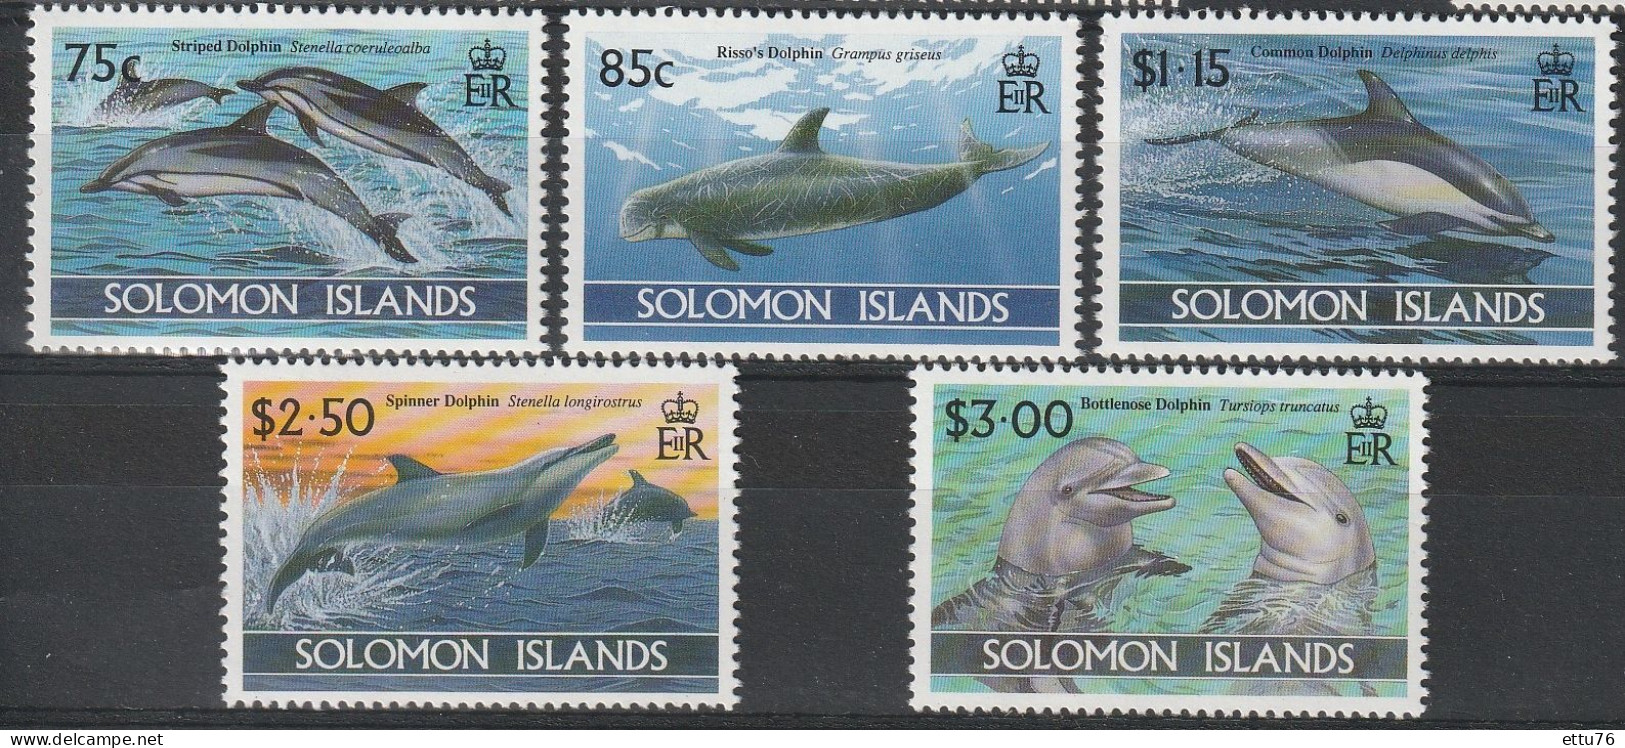 Solomon Islands 1994  Dolphins  Set  MNH - Dolphins